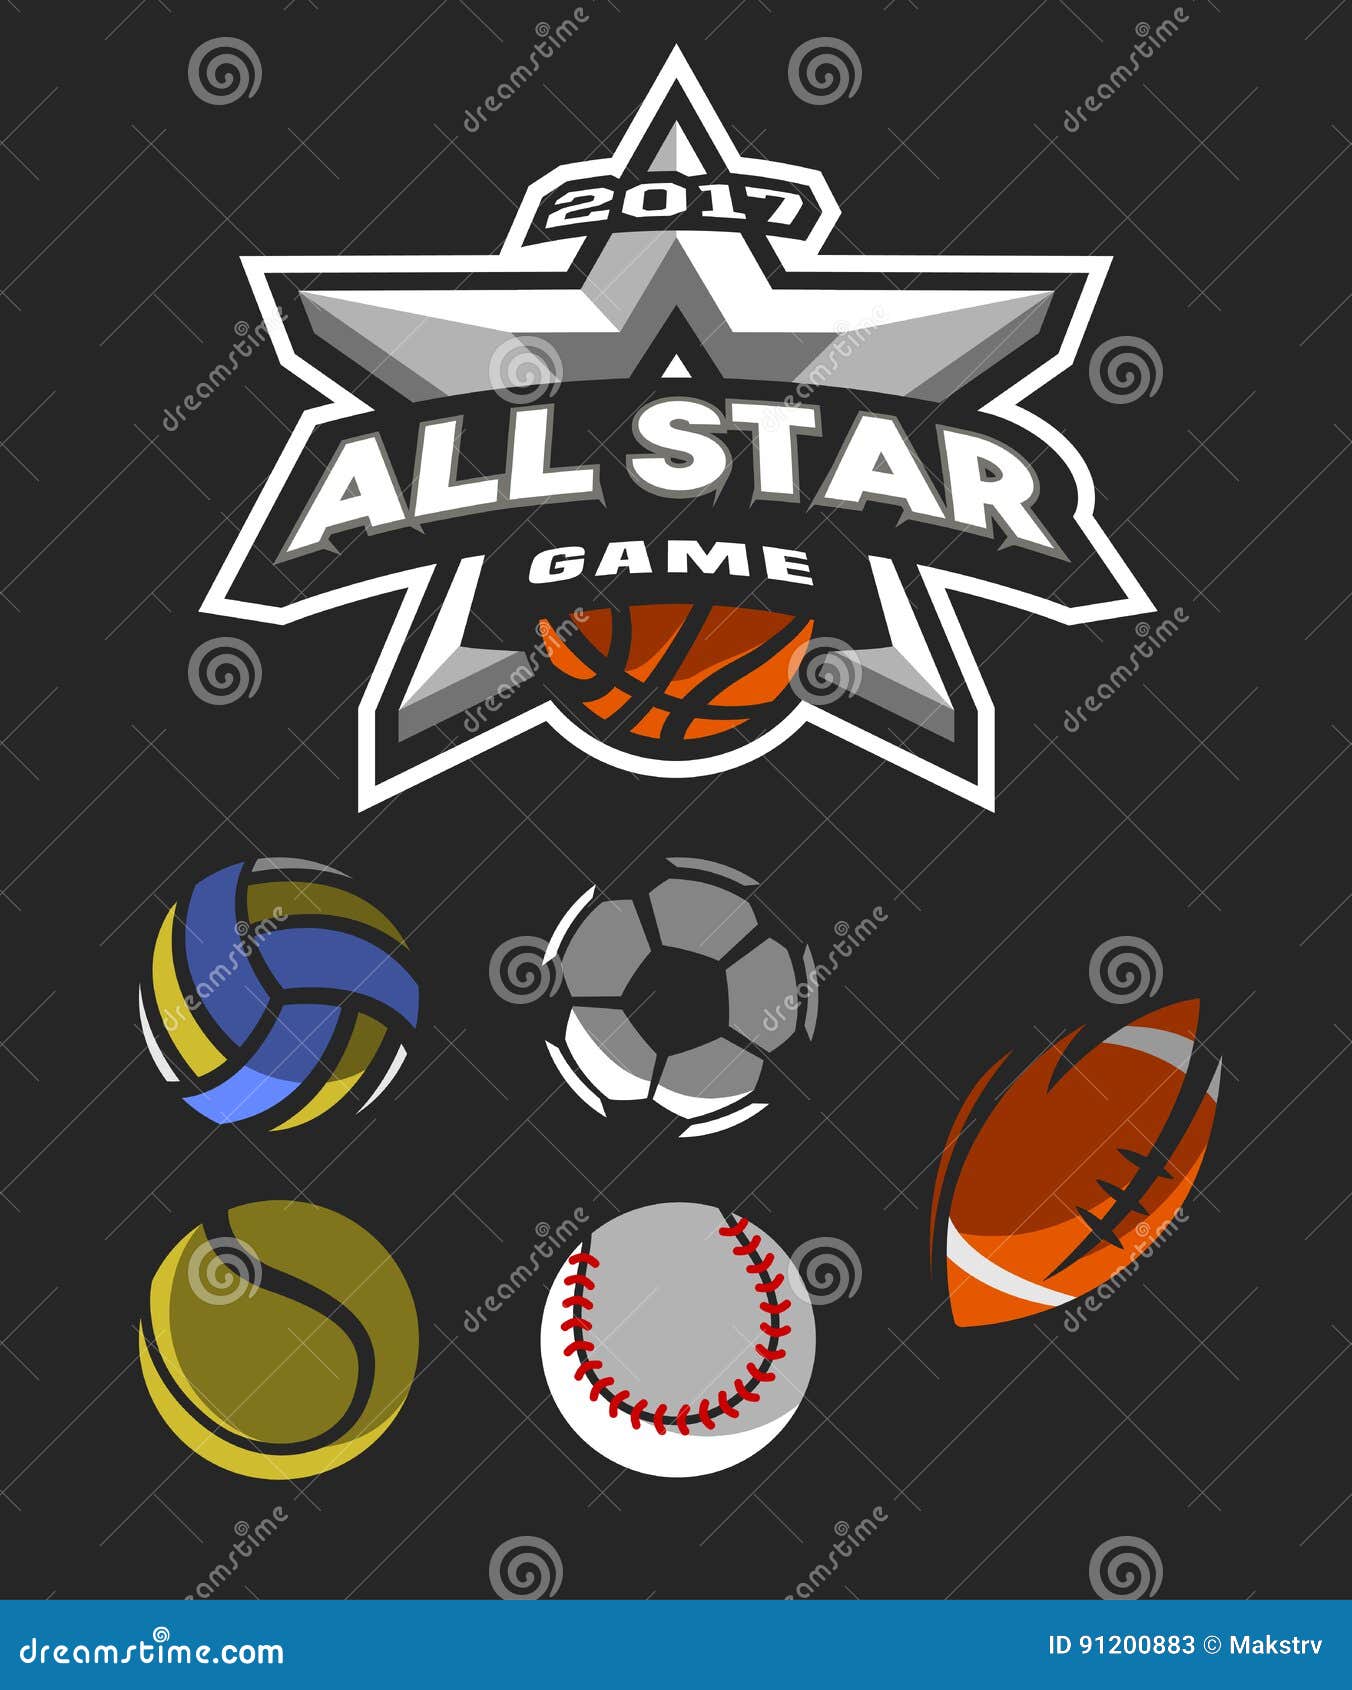 all star game logo, emblem.